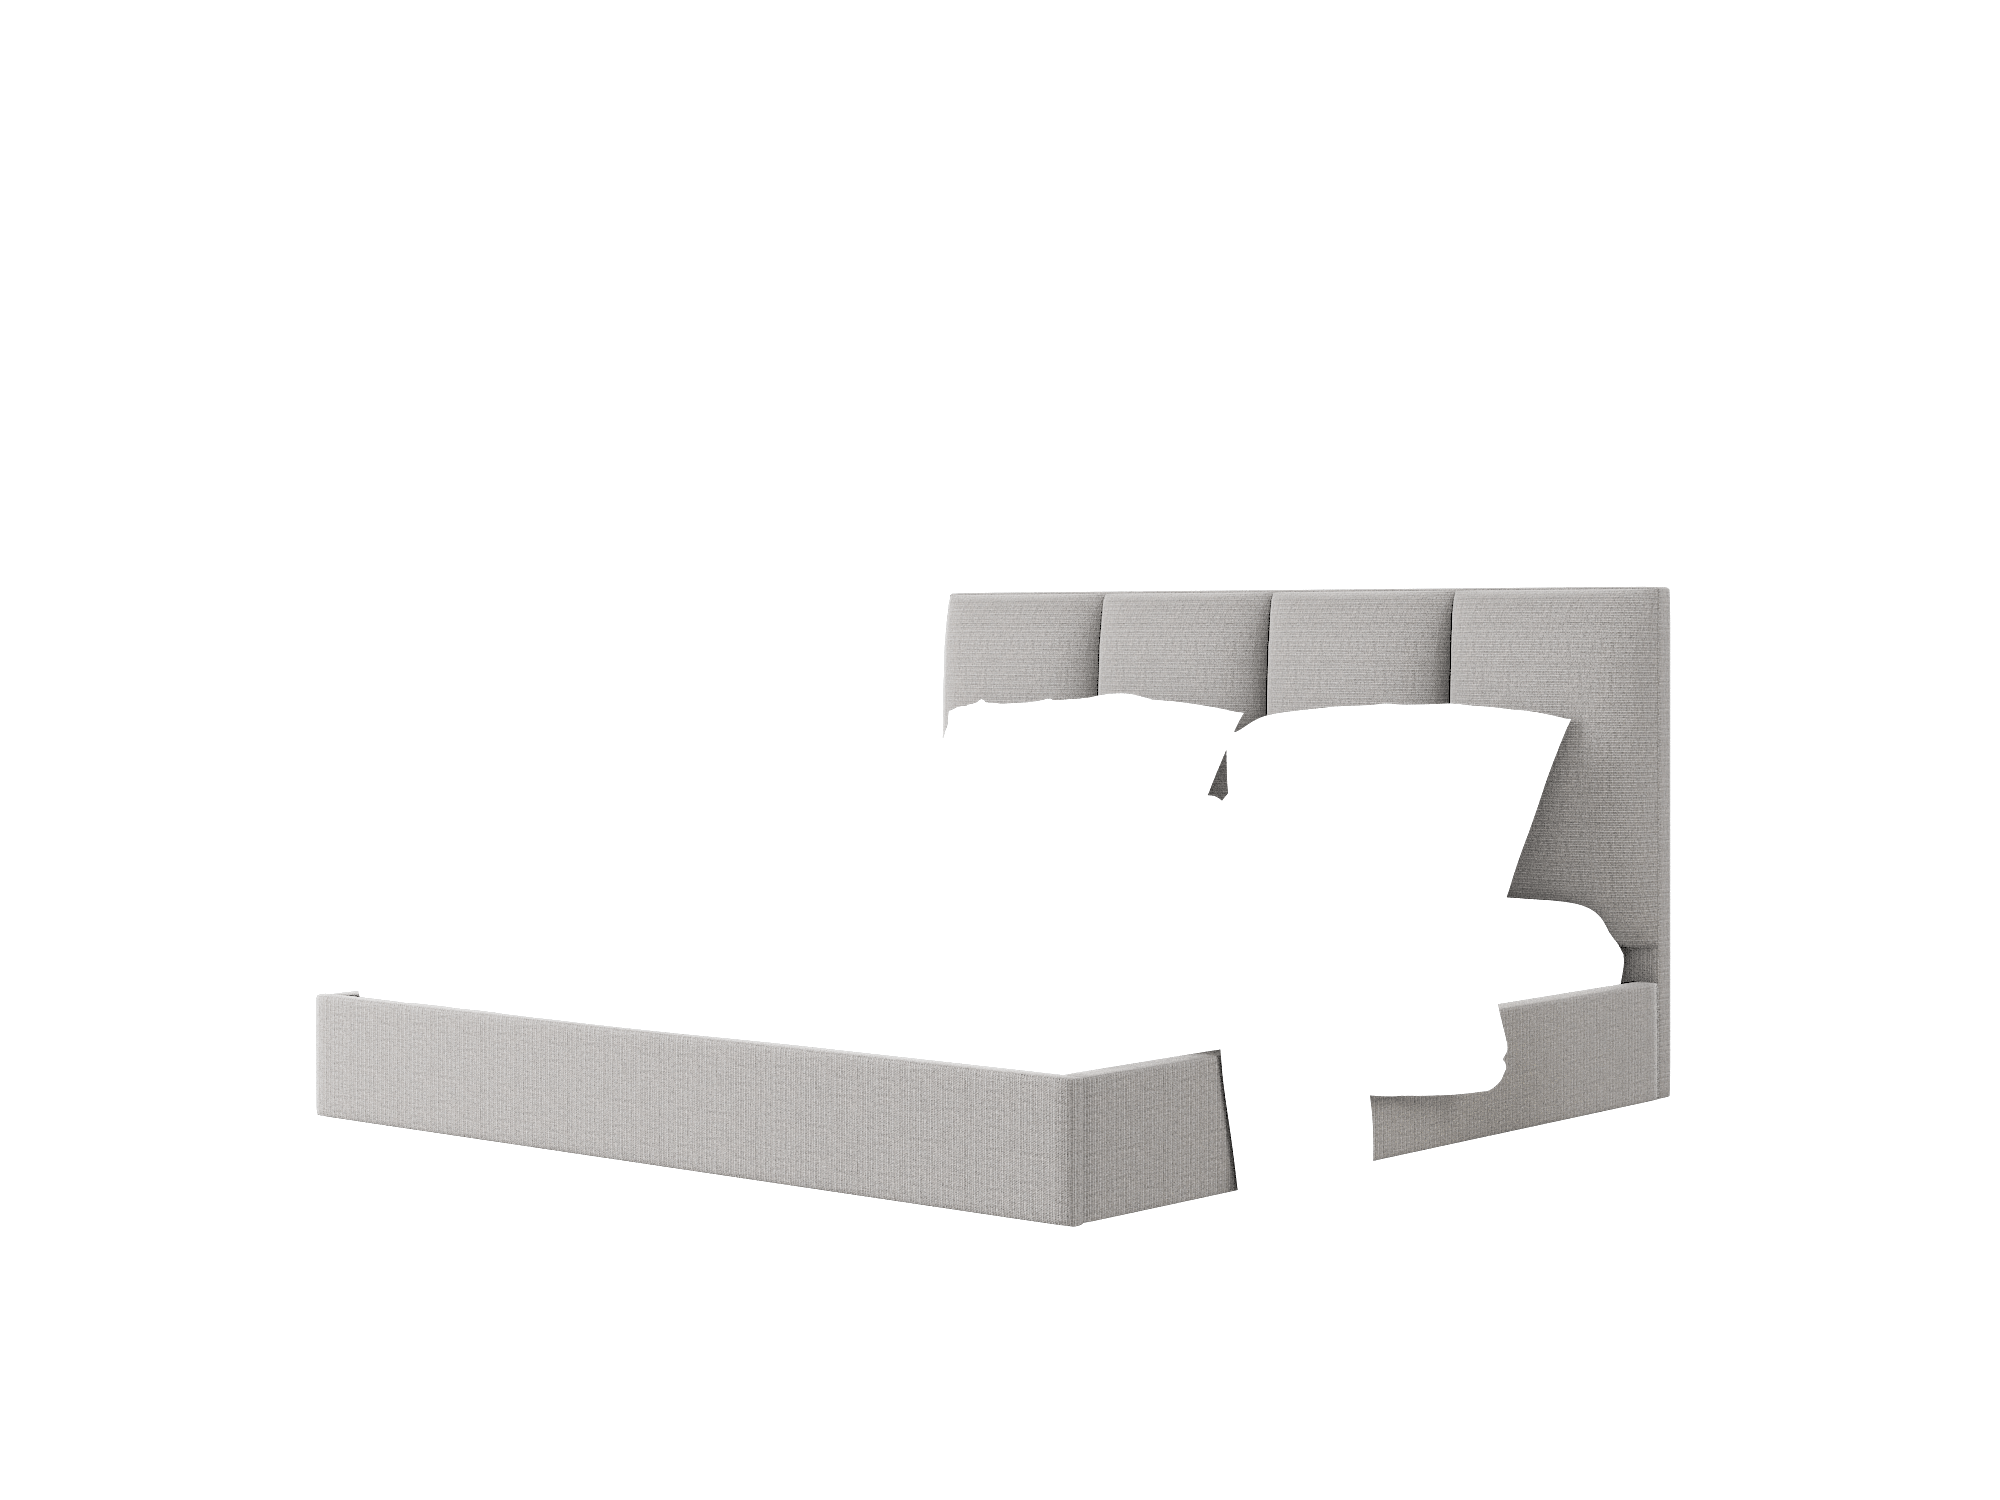 Celine Terrain Oatmeal Bed King Room Texture